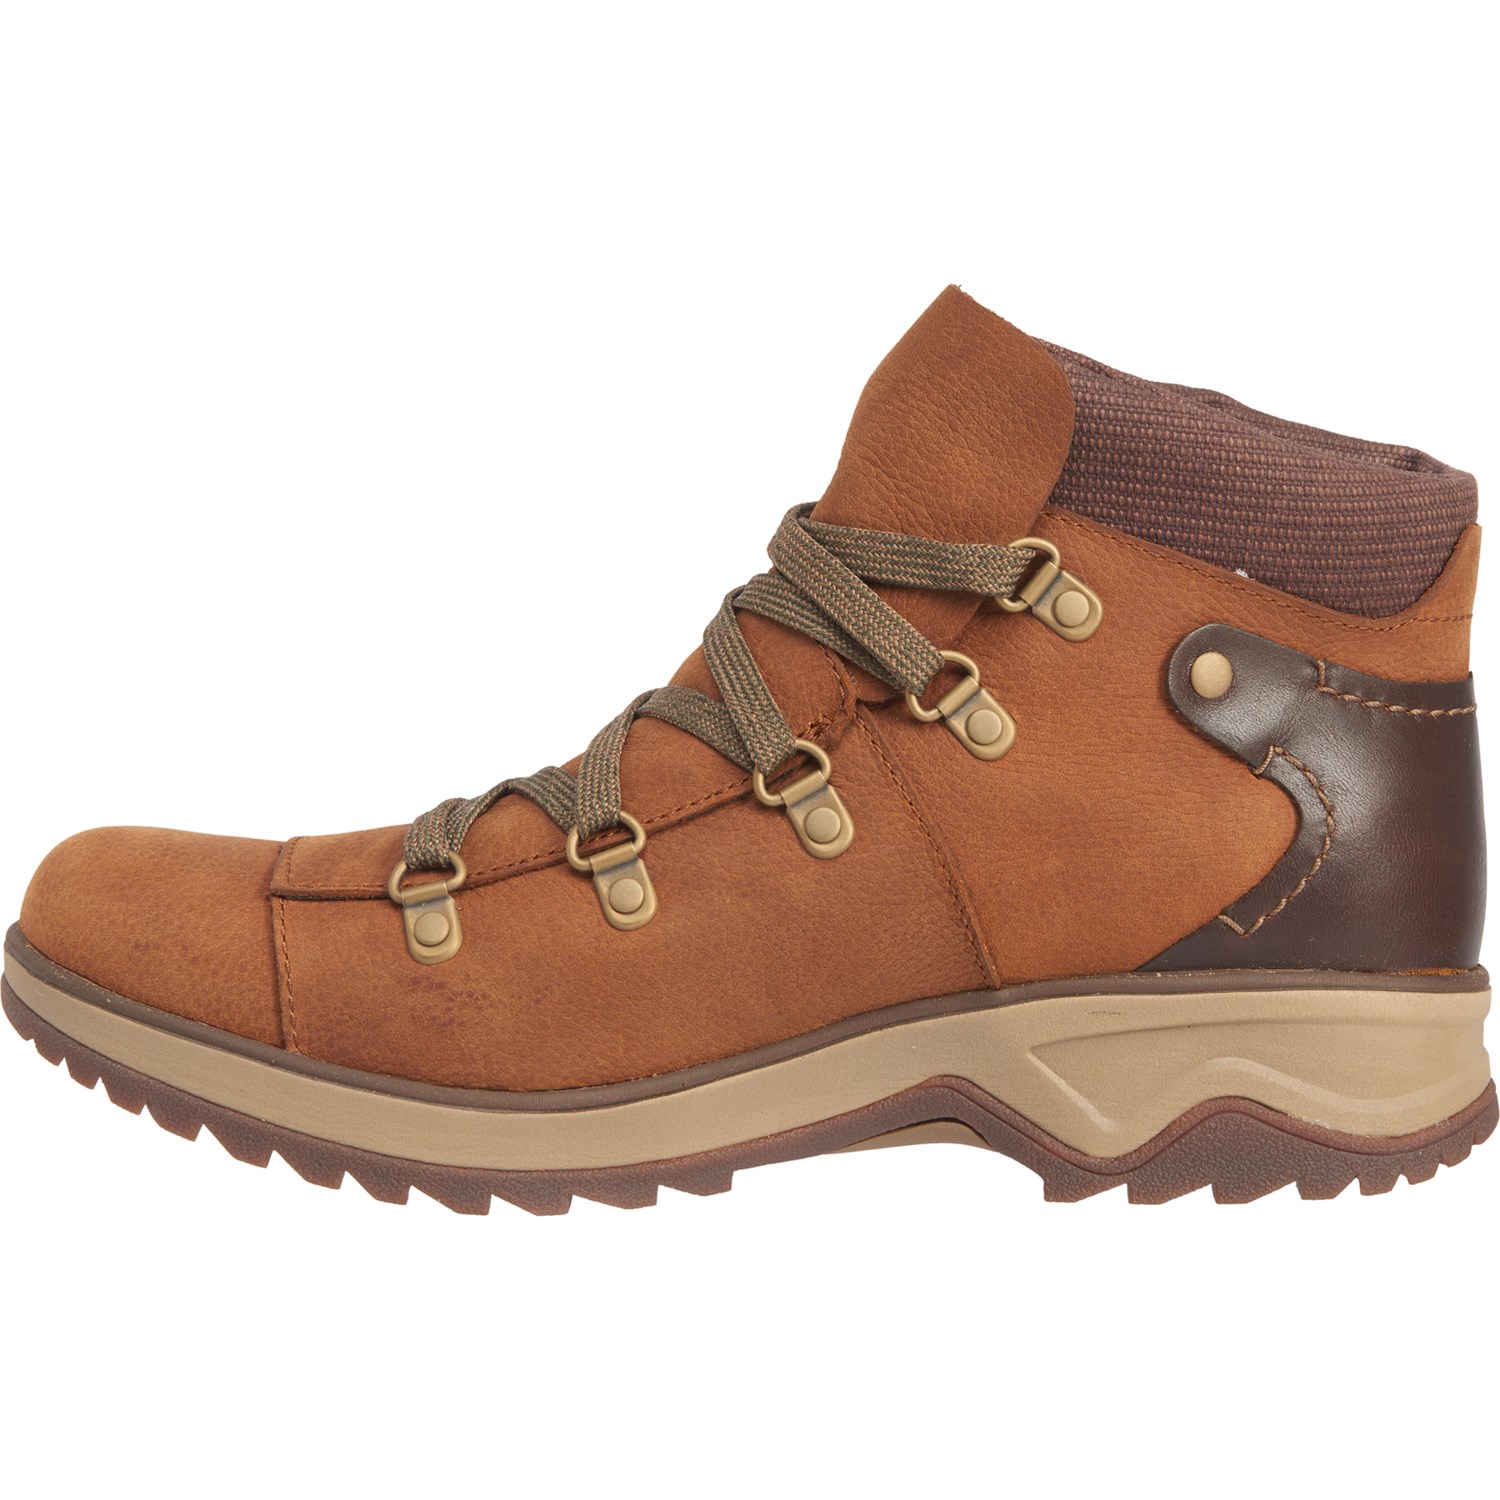 Merrell Eventyr Vera Bluff Hiking Boots (For Women) - Save 42%